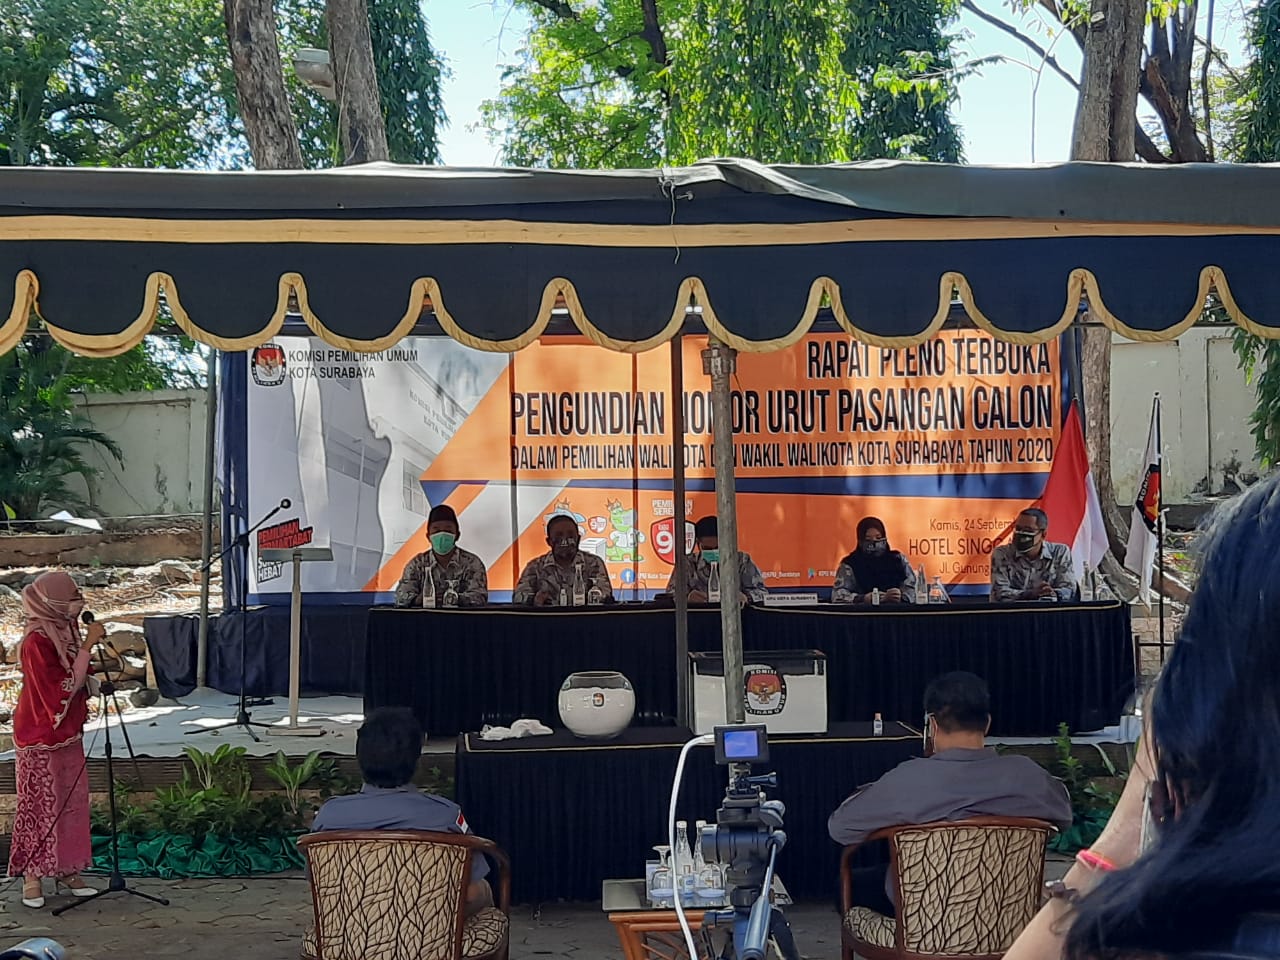 Rapat pleno terbuka KPU Kota Surabaya dengan agenda pengundian nomor urut pasangan calon walikota dan wakil walikota di Pilwali Surabaya. (Foto: Alief Sambogo/Ngopibareng.id)